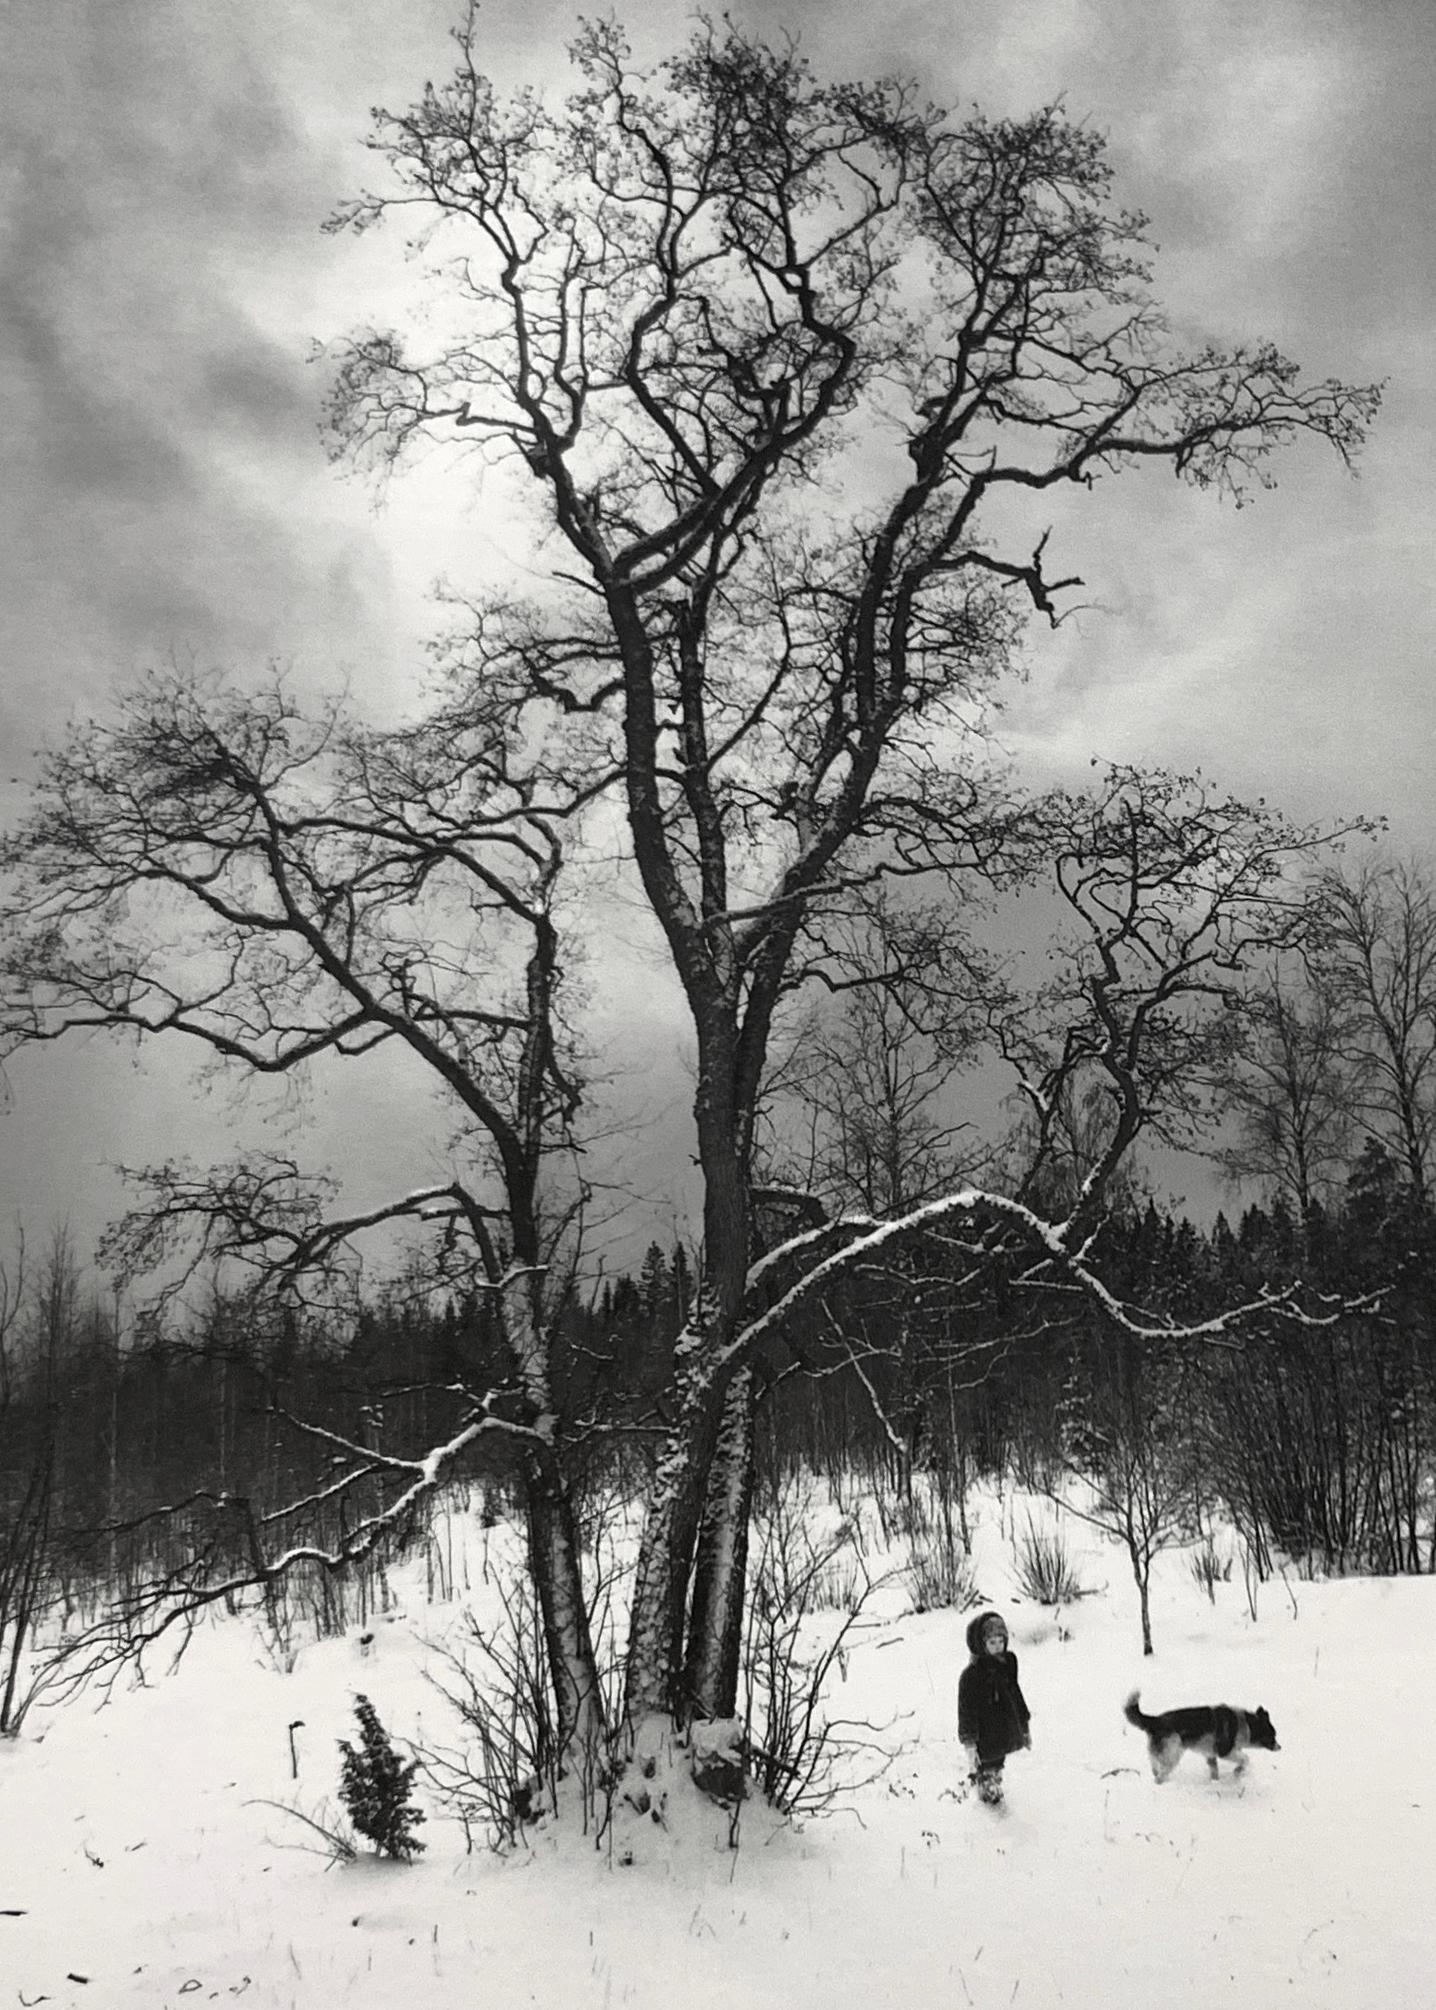 Pentti Sammallahti Black and White Photograph - Finström, Finland (Child with Dog in Snow)